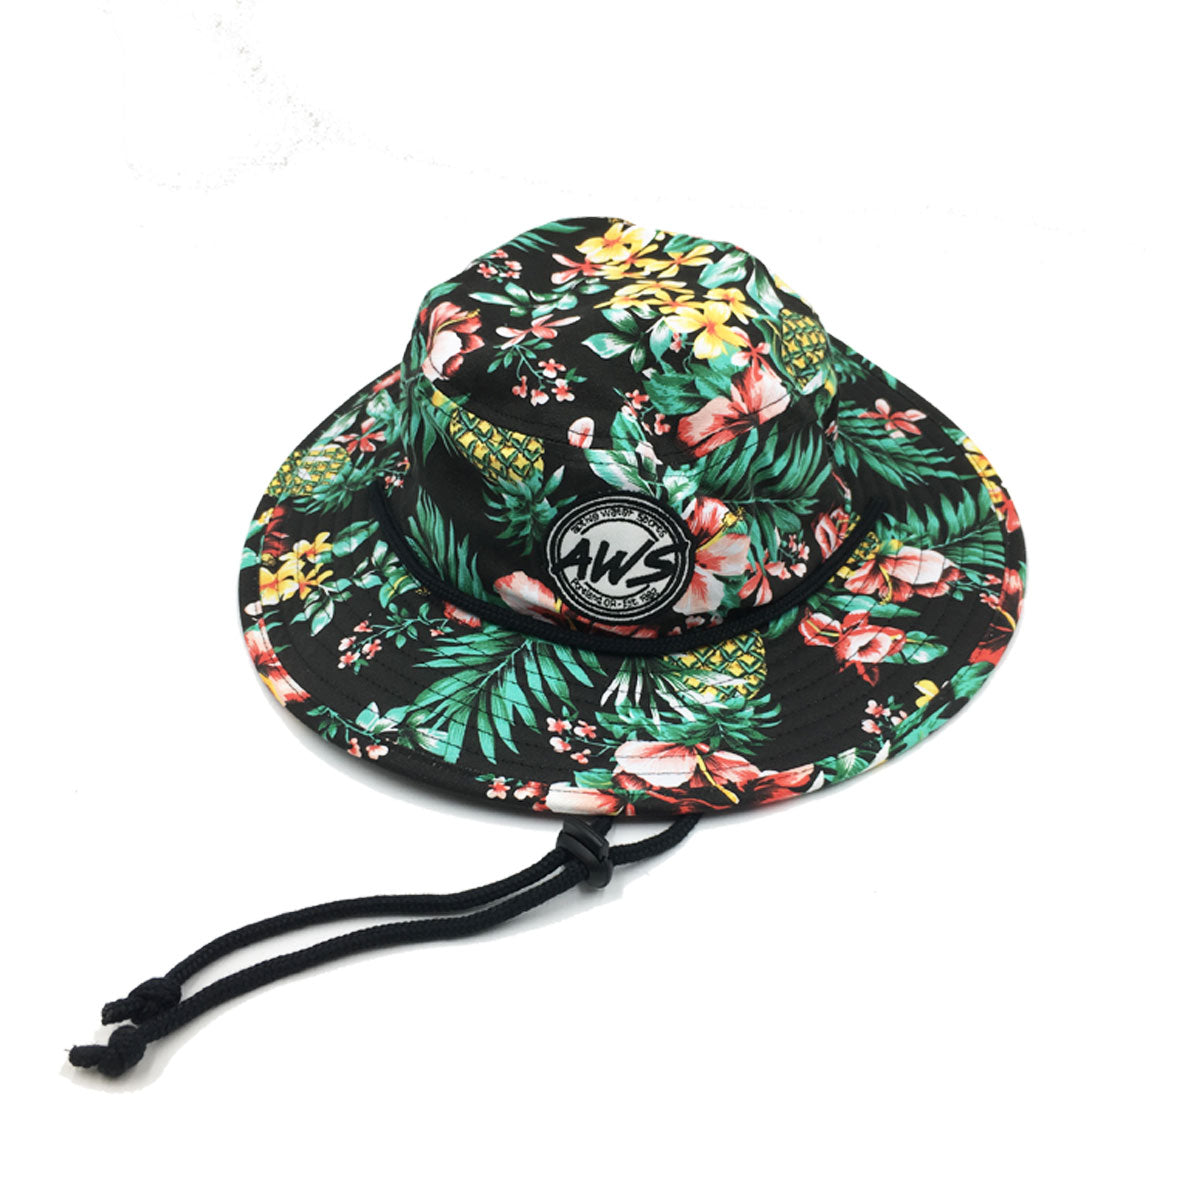 AWS Bucket Hat - Black/Tropical